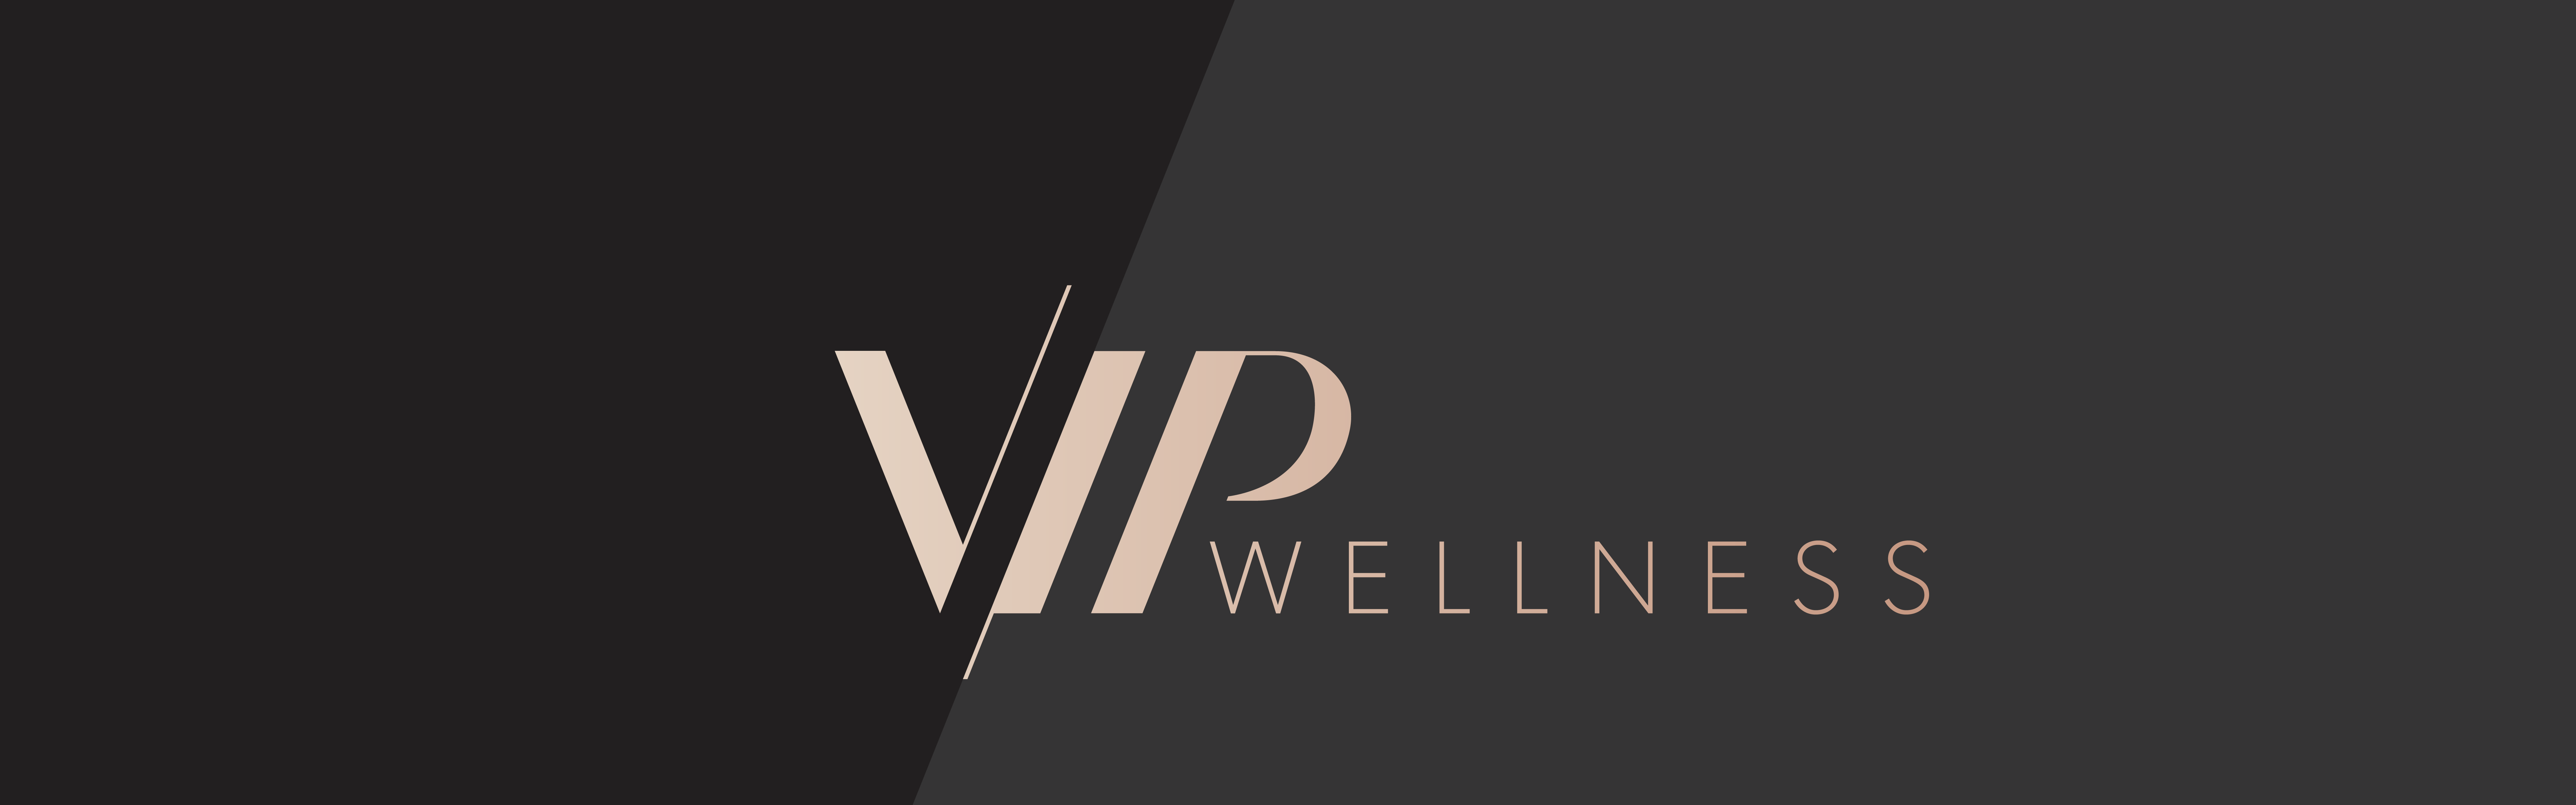 A sleek, modern logo for "VIP Wellness" set against a dual-tone black and dark grey background.